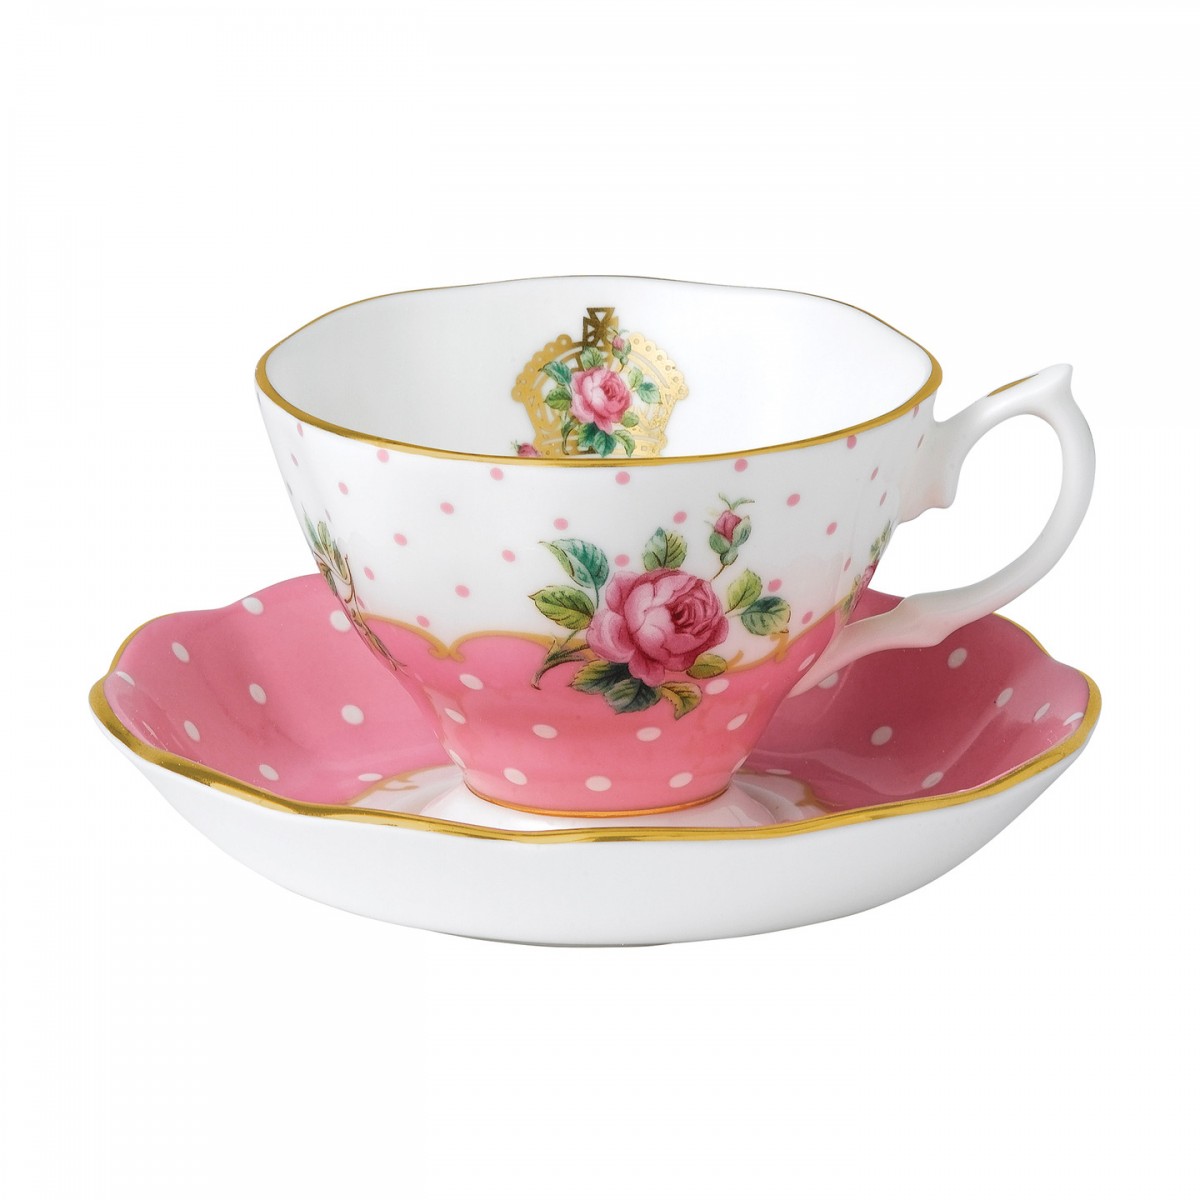 Cheeky Pink Vintage Teacup   Saucer   Royal Albert   Us